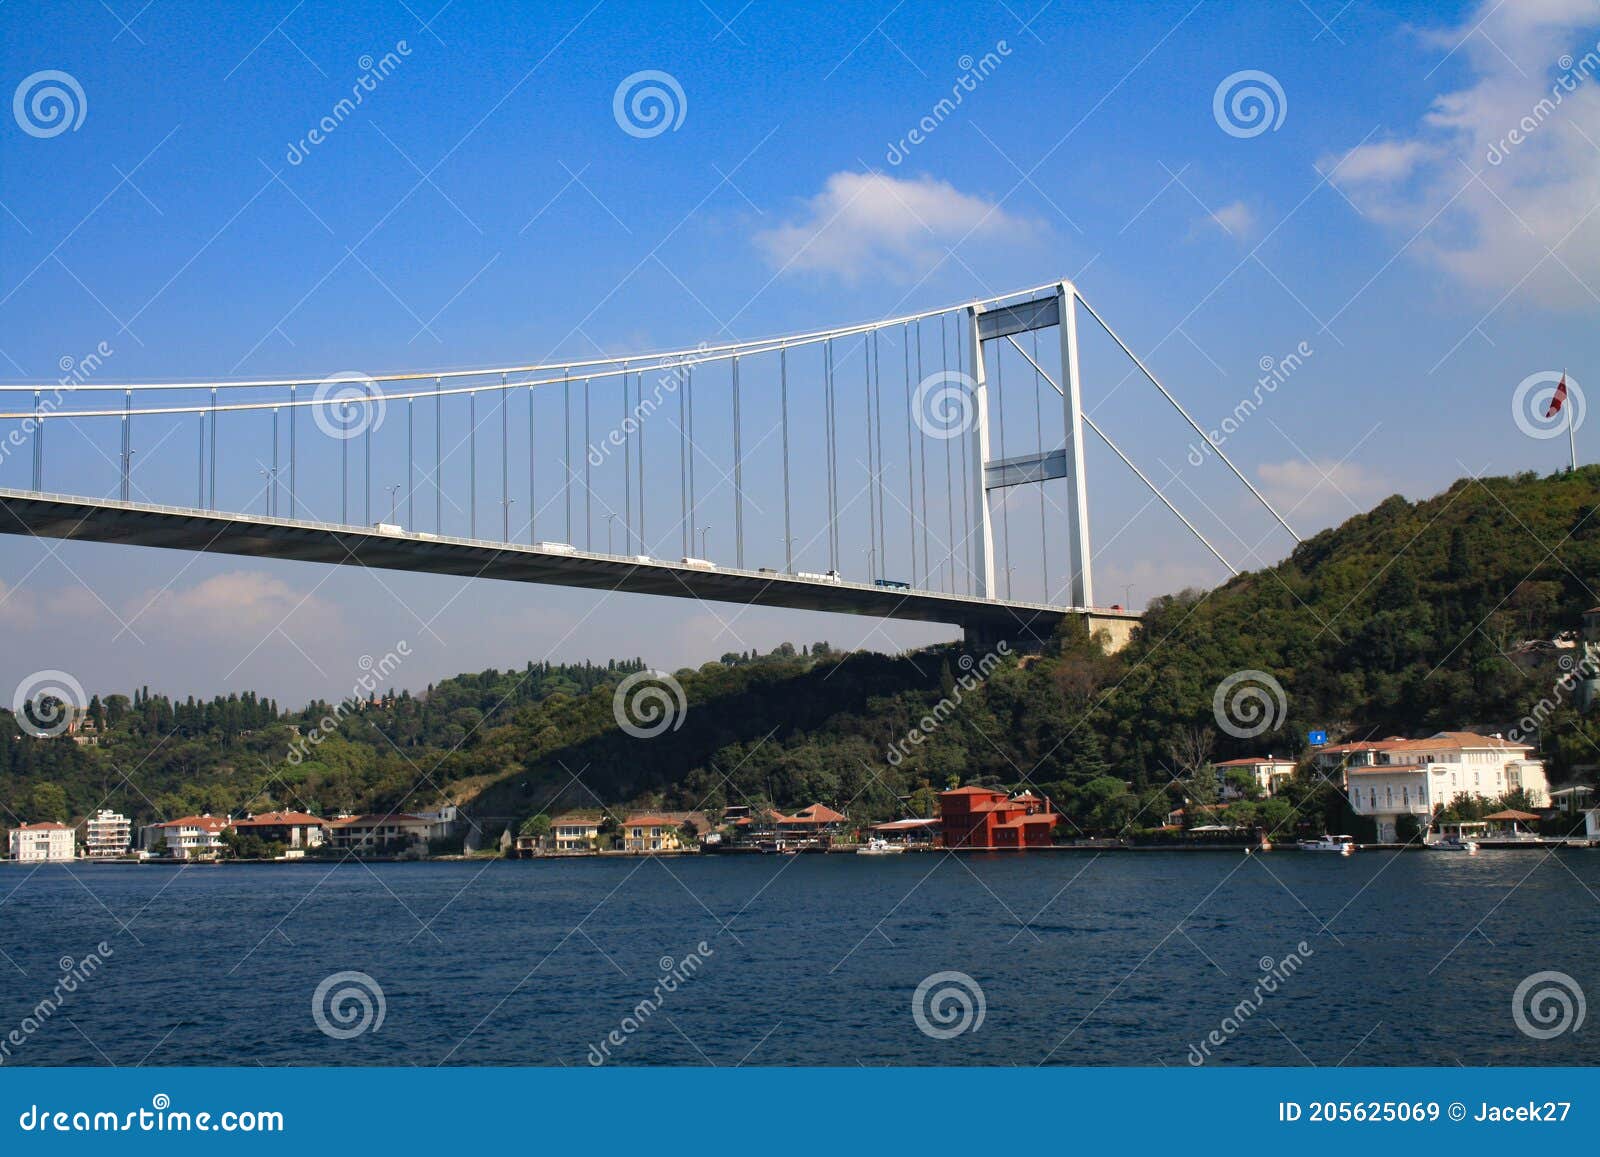 bosphorus bridge also: i bosforski bridge, tur. boÃÅ¸az kÃÂ¶prÃÂ¼sÃÂ¼ - road bridge over the bosphorus strait in turkey